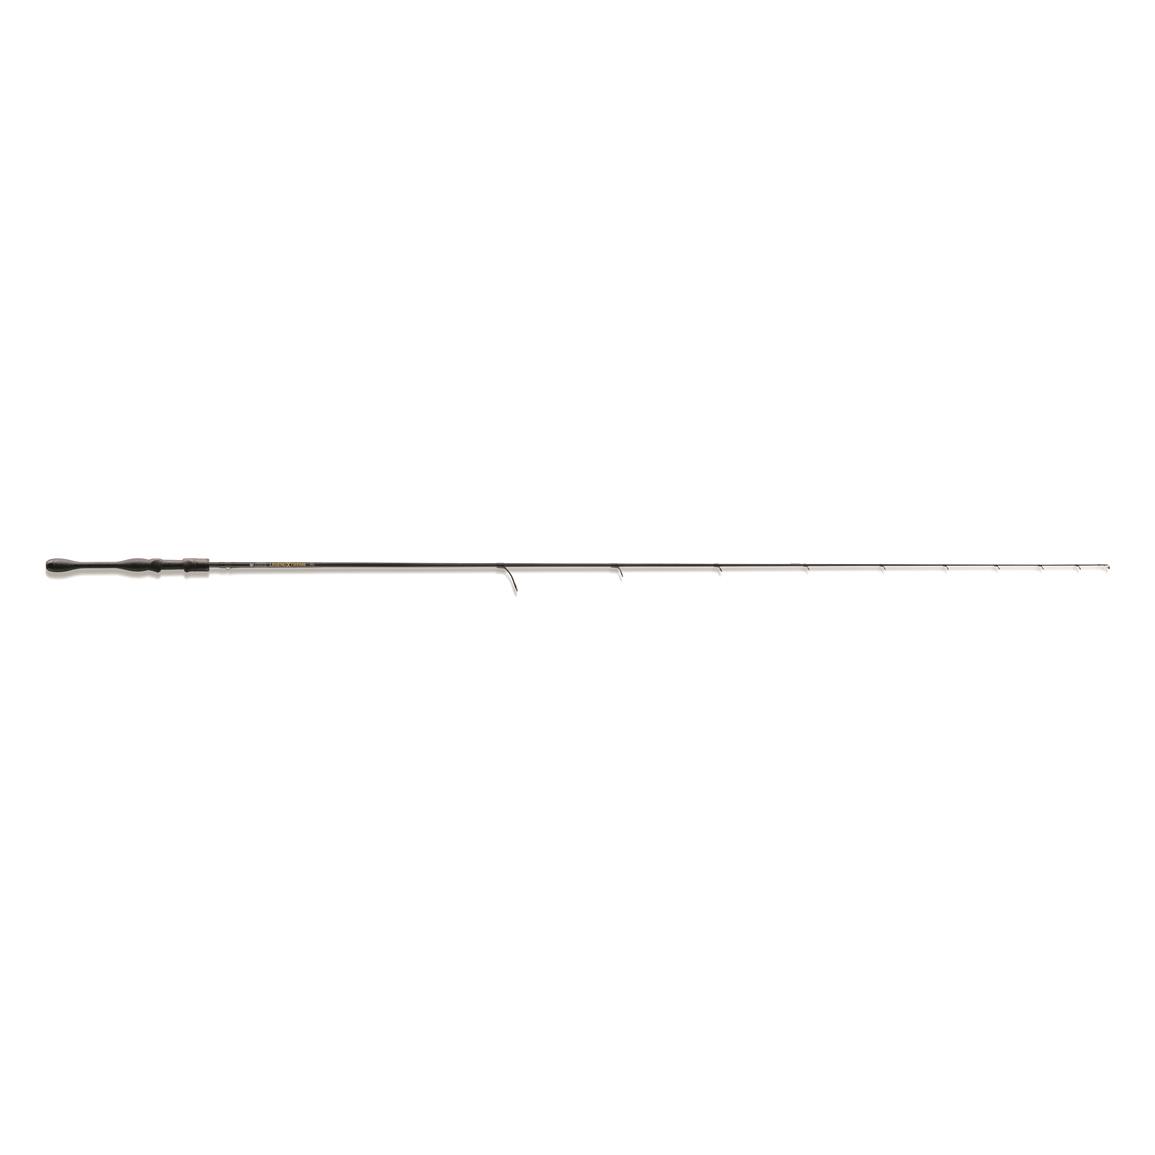 St. Croix Legend Xtreme Spinning Rod, 7'3" Length, Medium Light Power, Xtra Fast Action